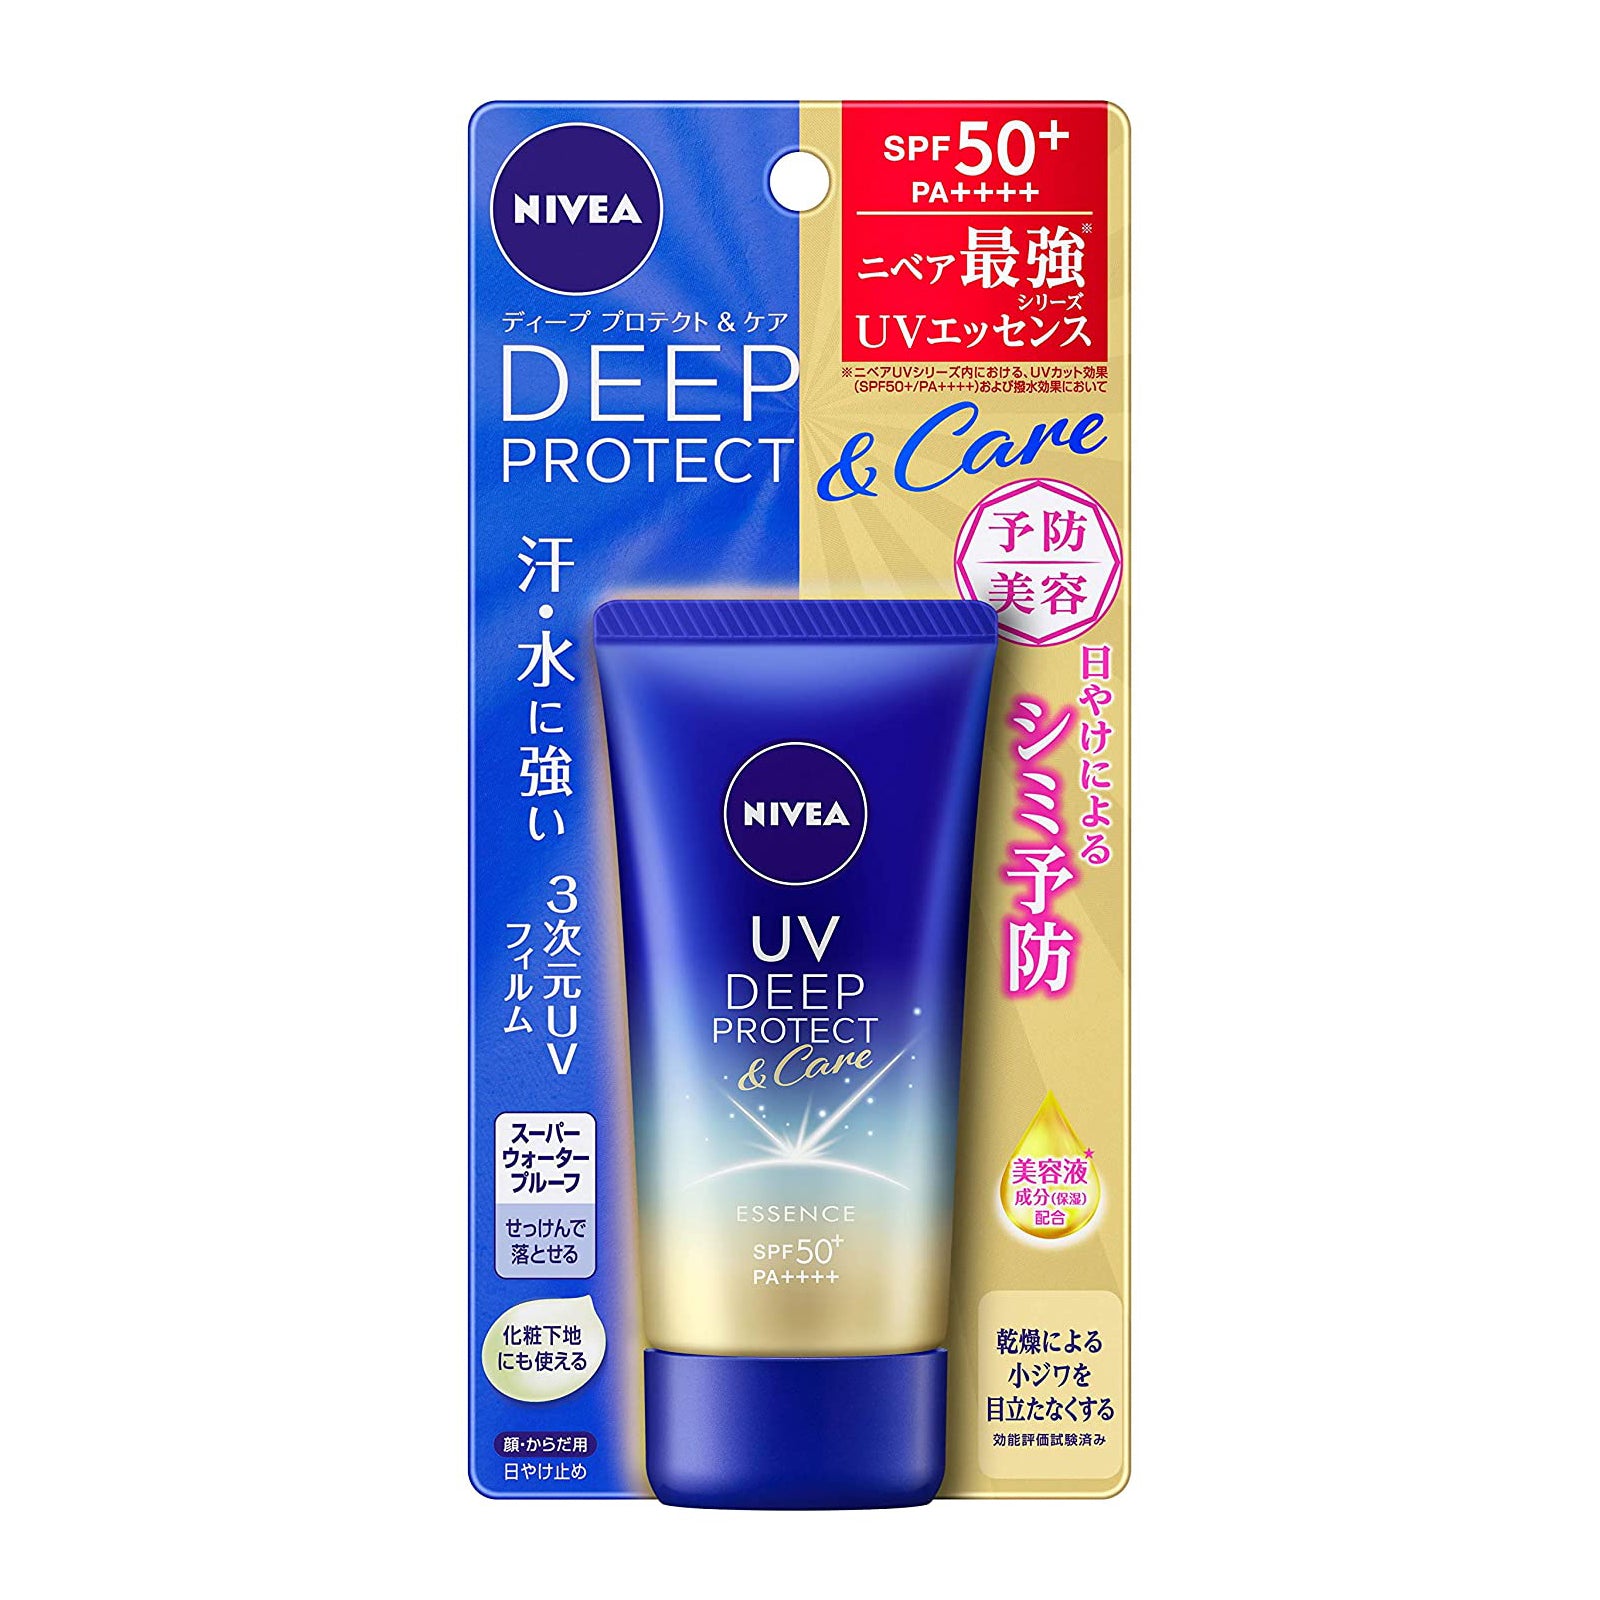 Nivea UV Deep Protect & Care Essence SPF 50+ Beauty Nivea Japan   